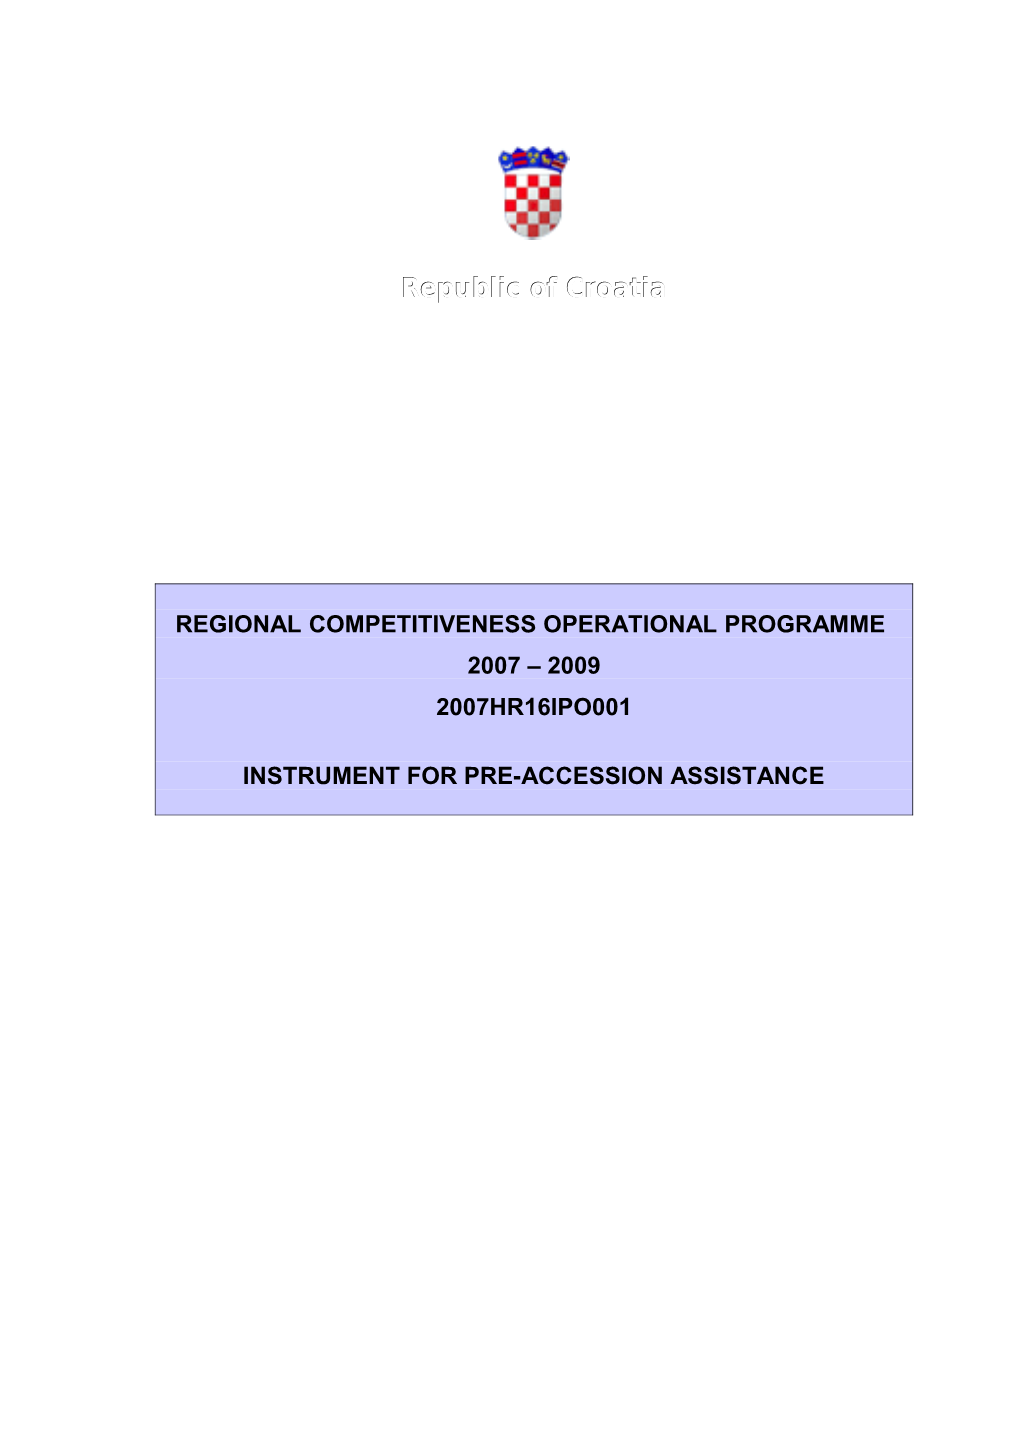 Regional Competitiveness Operational Programme